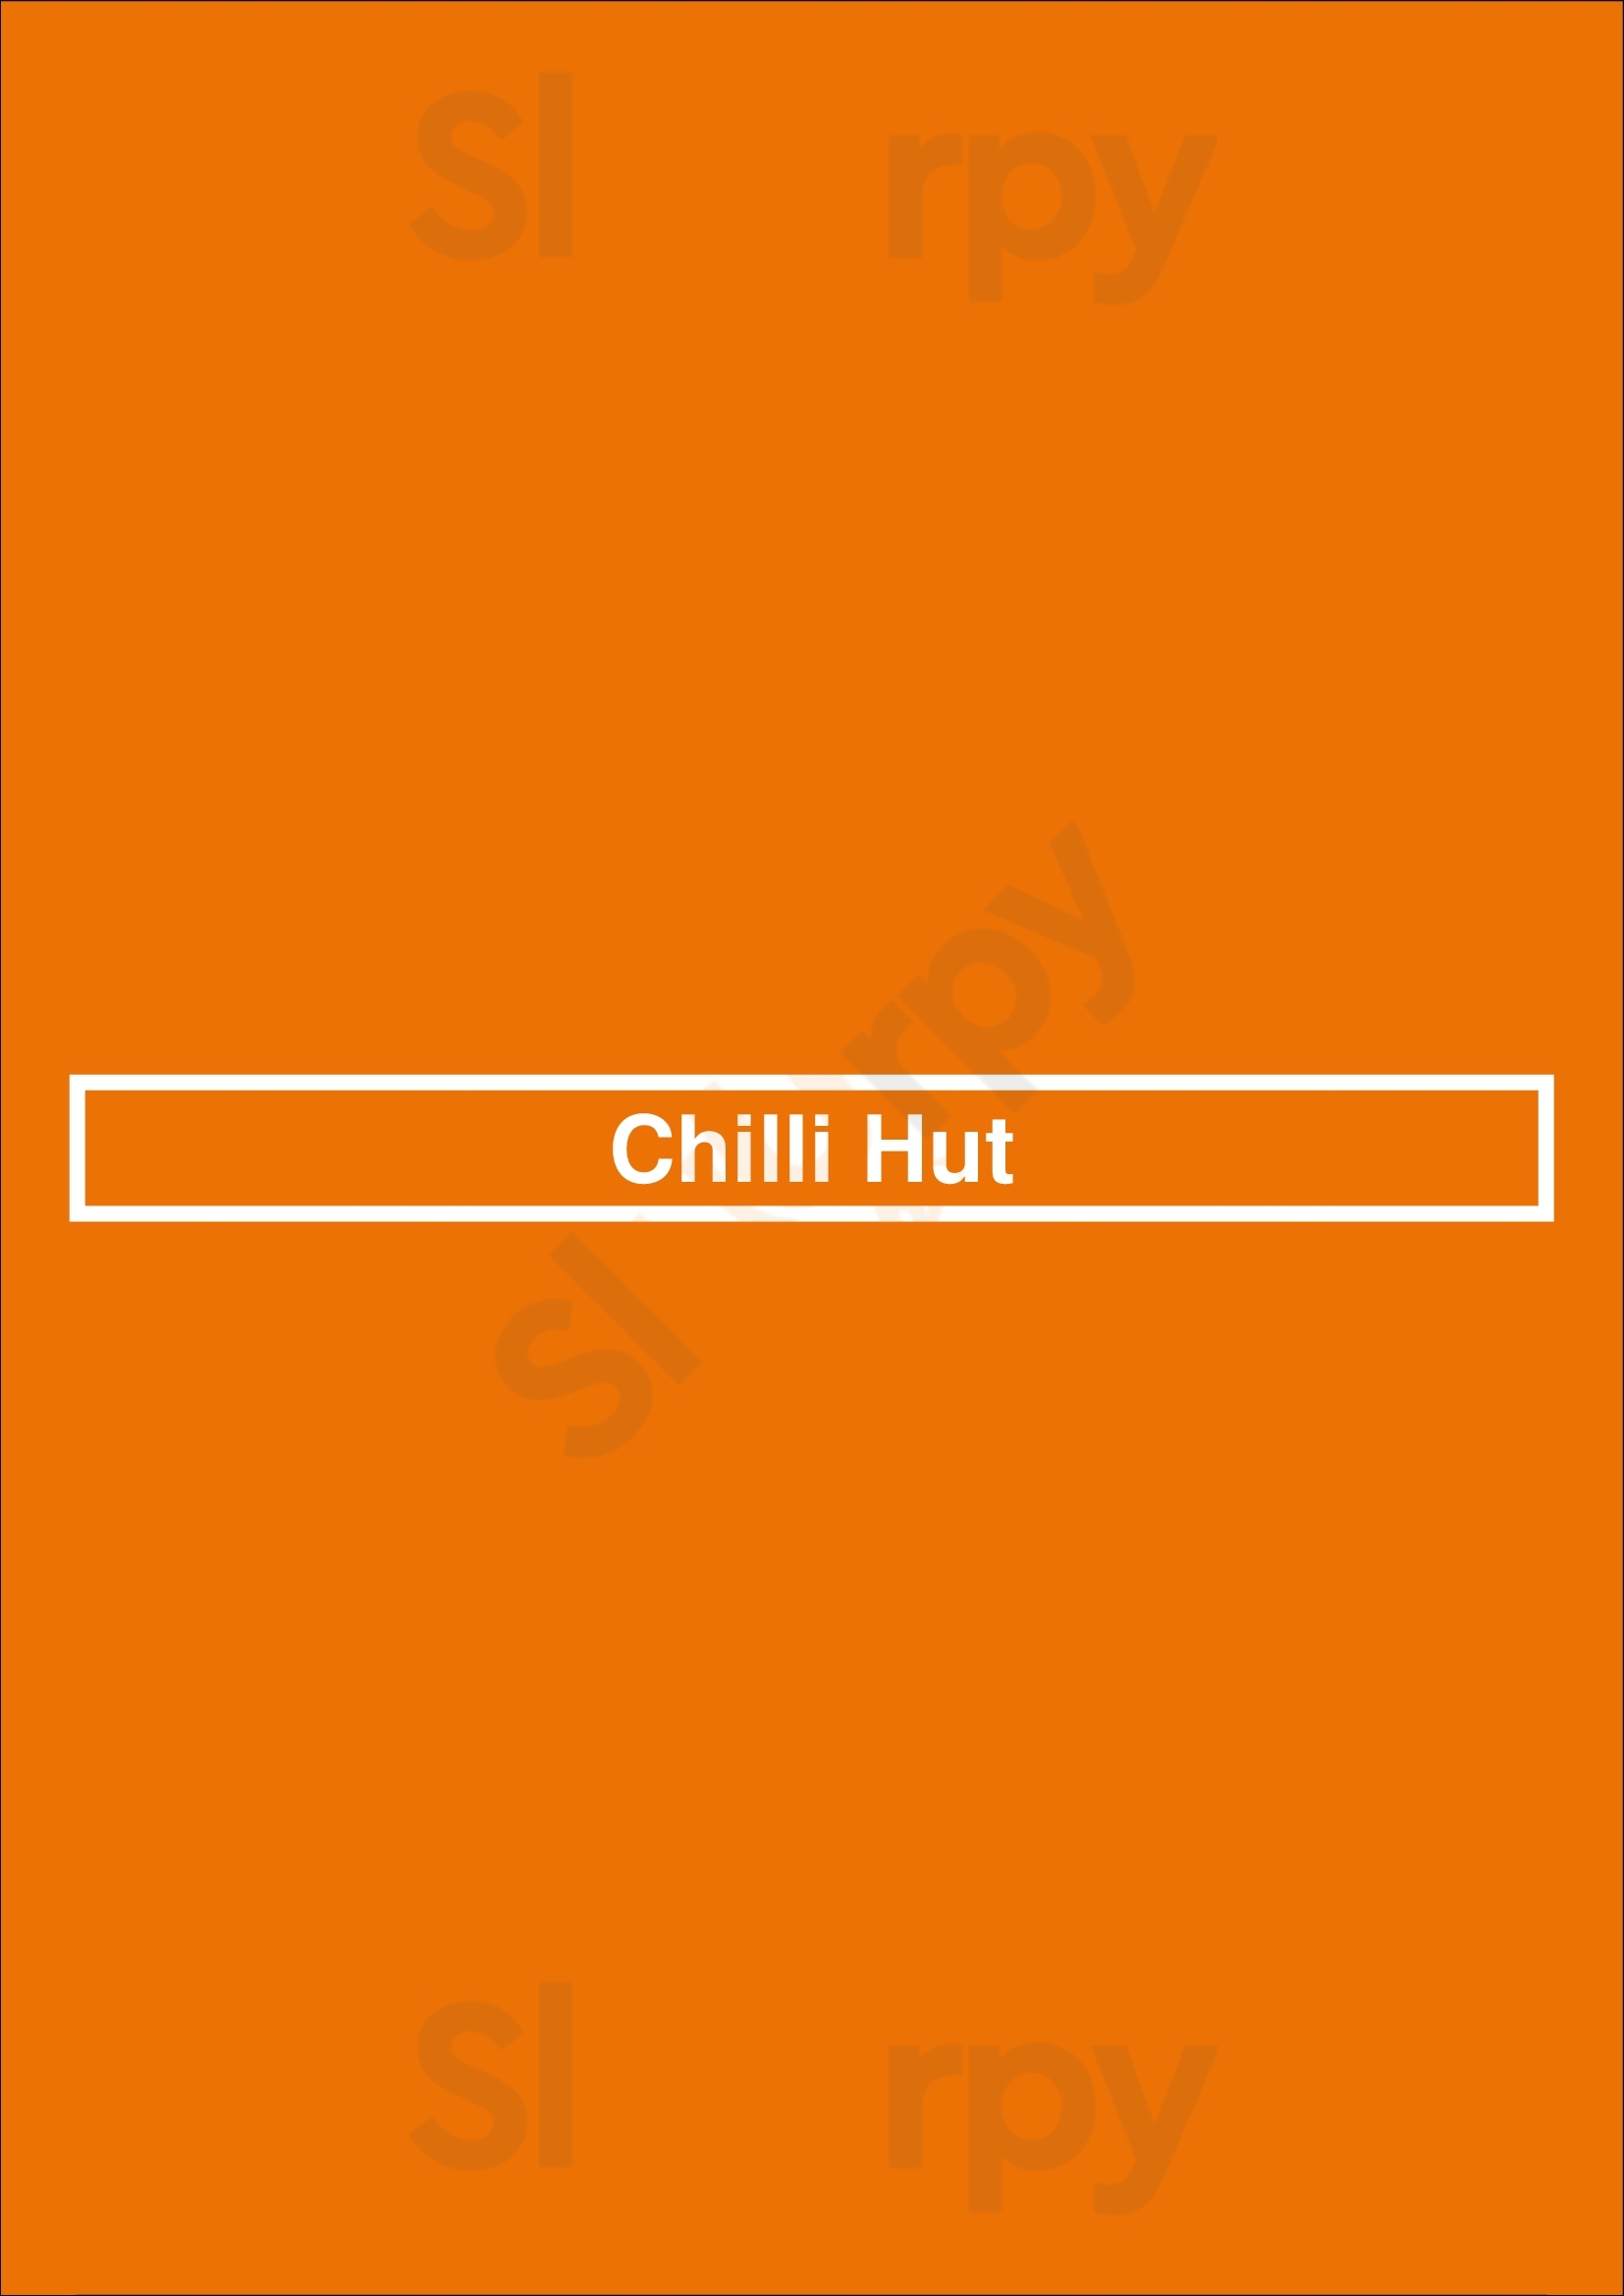 Chilli Hut Edinburgh Menu - 1